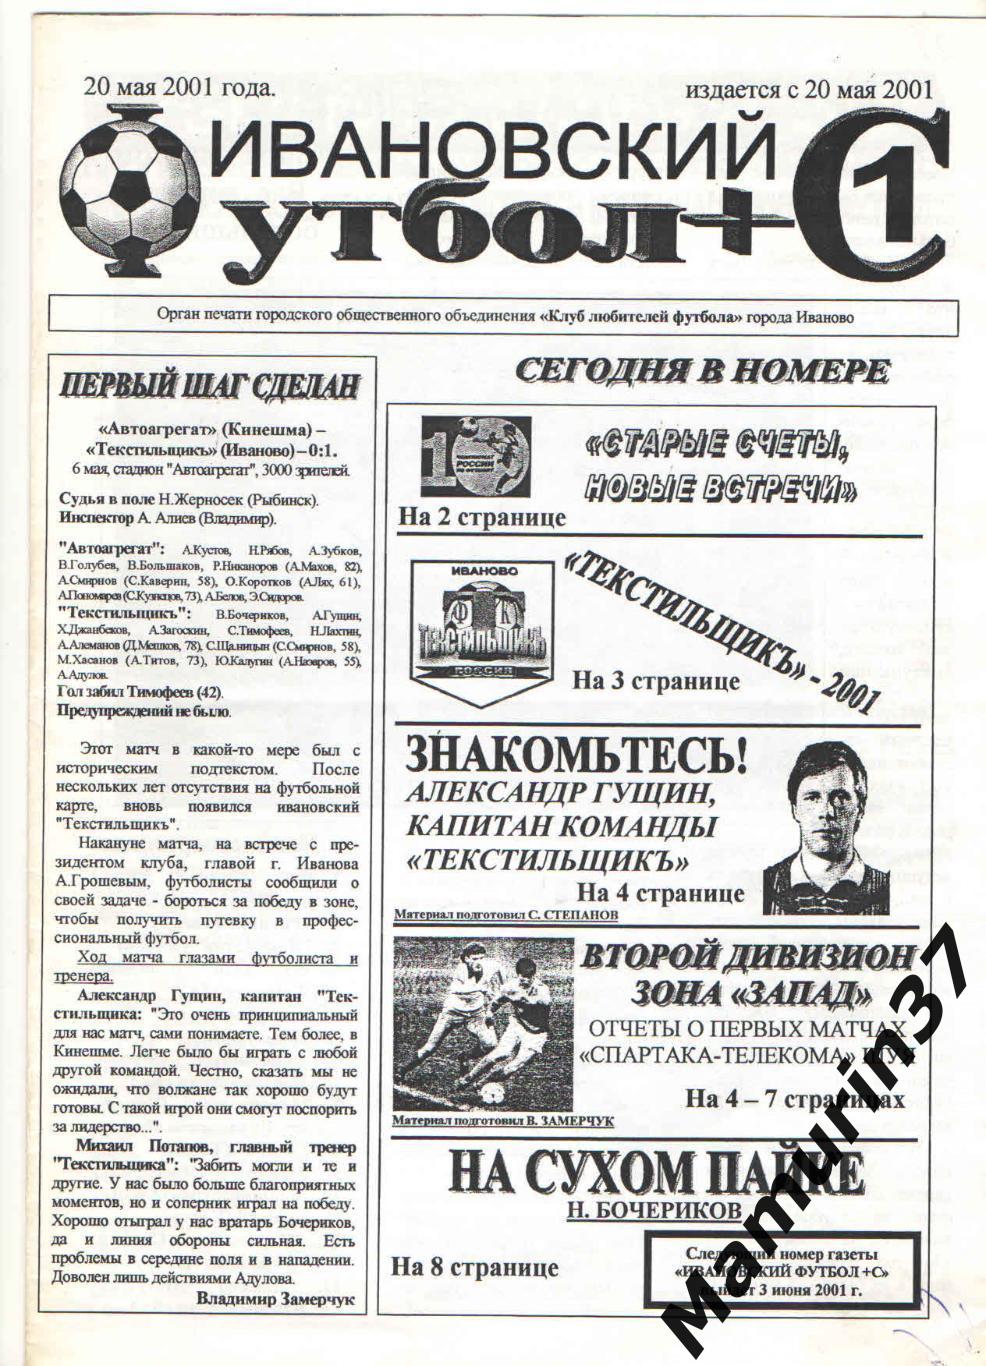 Газета Ивановский футбол+С № 1 2001 год Иваново